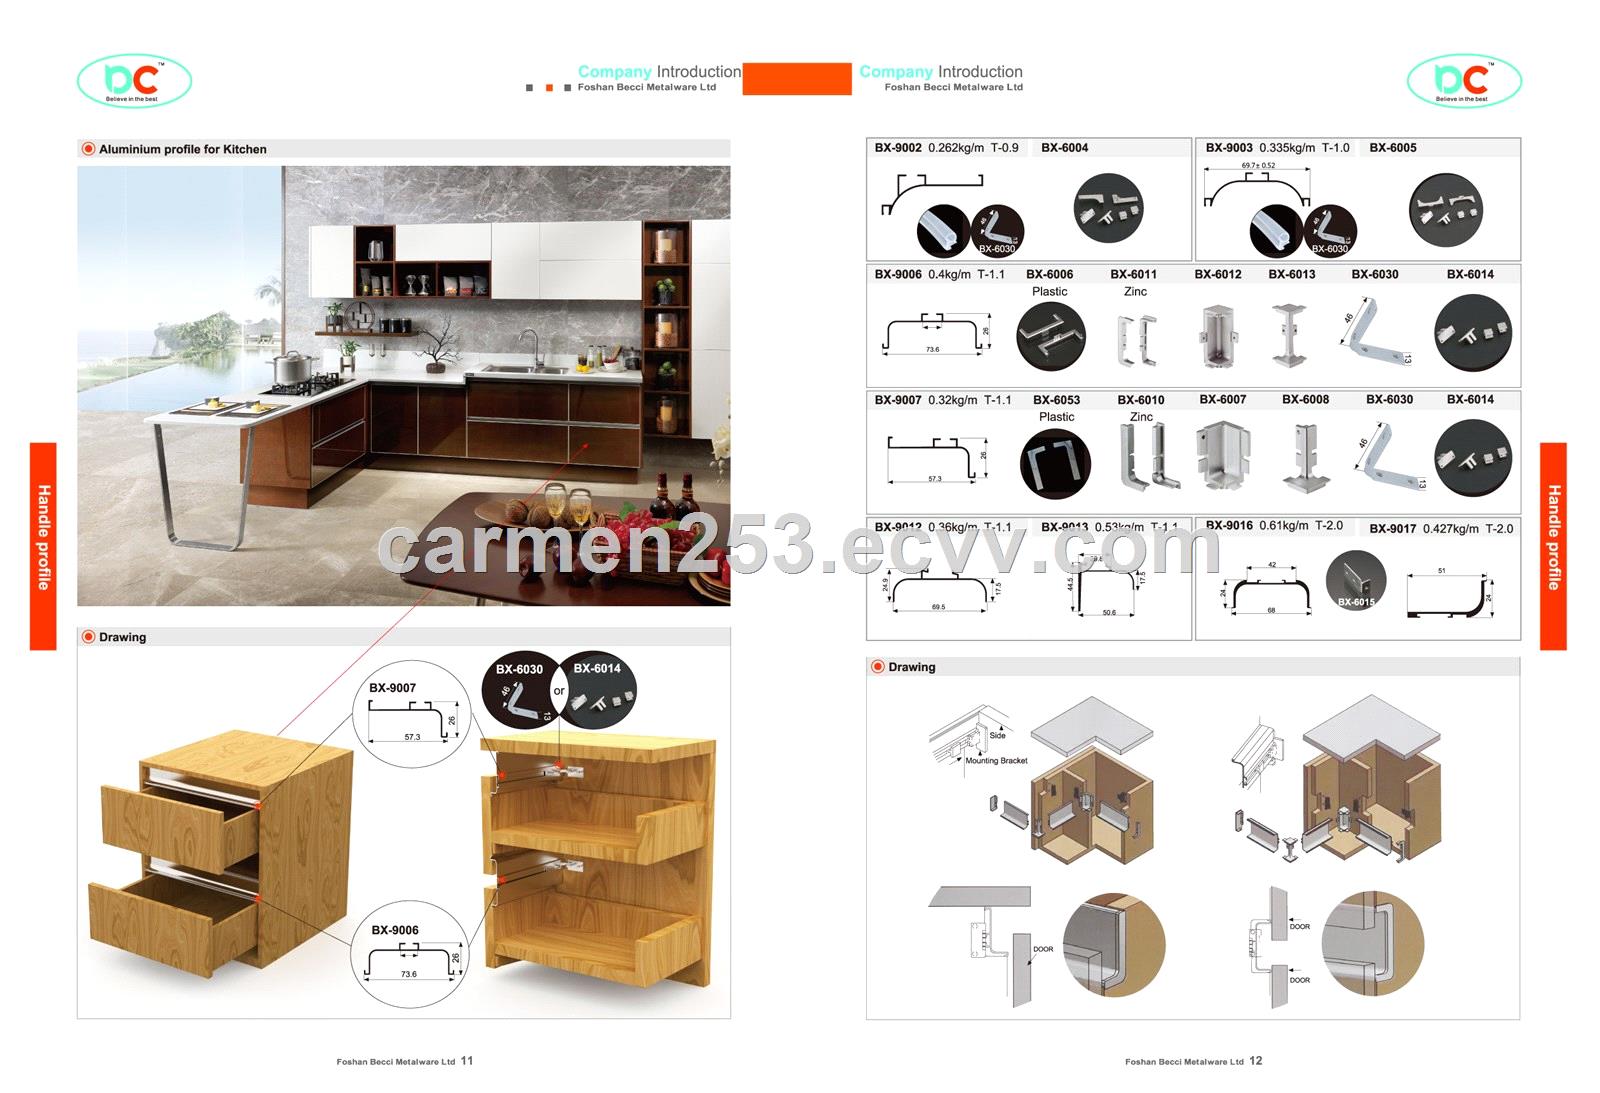 China Factory Coated Kitchen Cabinet Extrusion Aluminium Frame